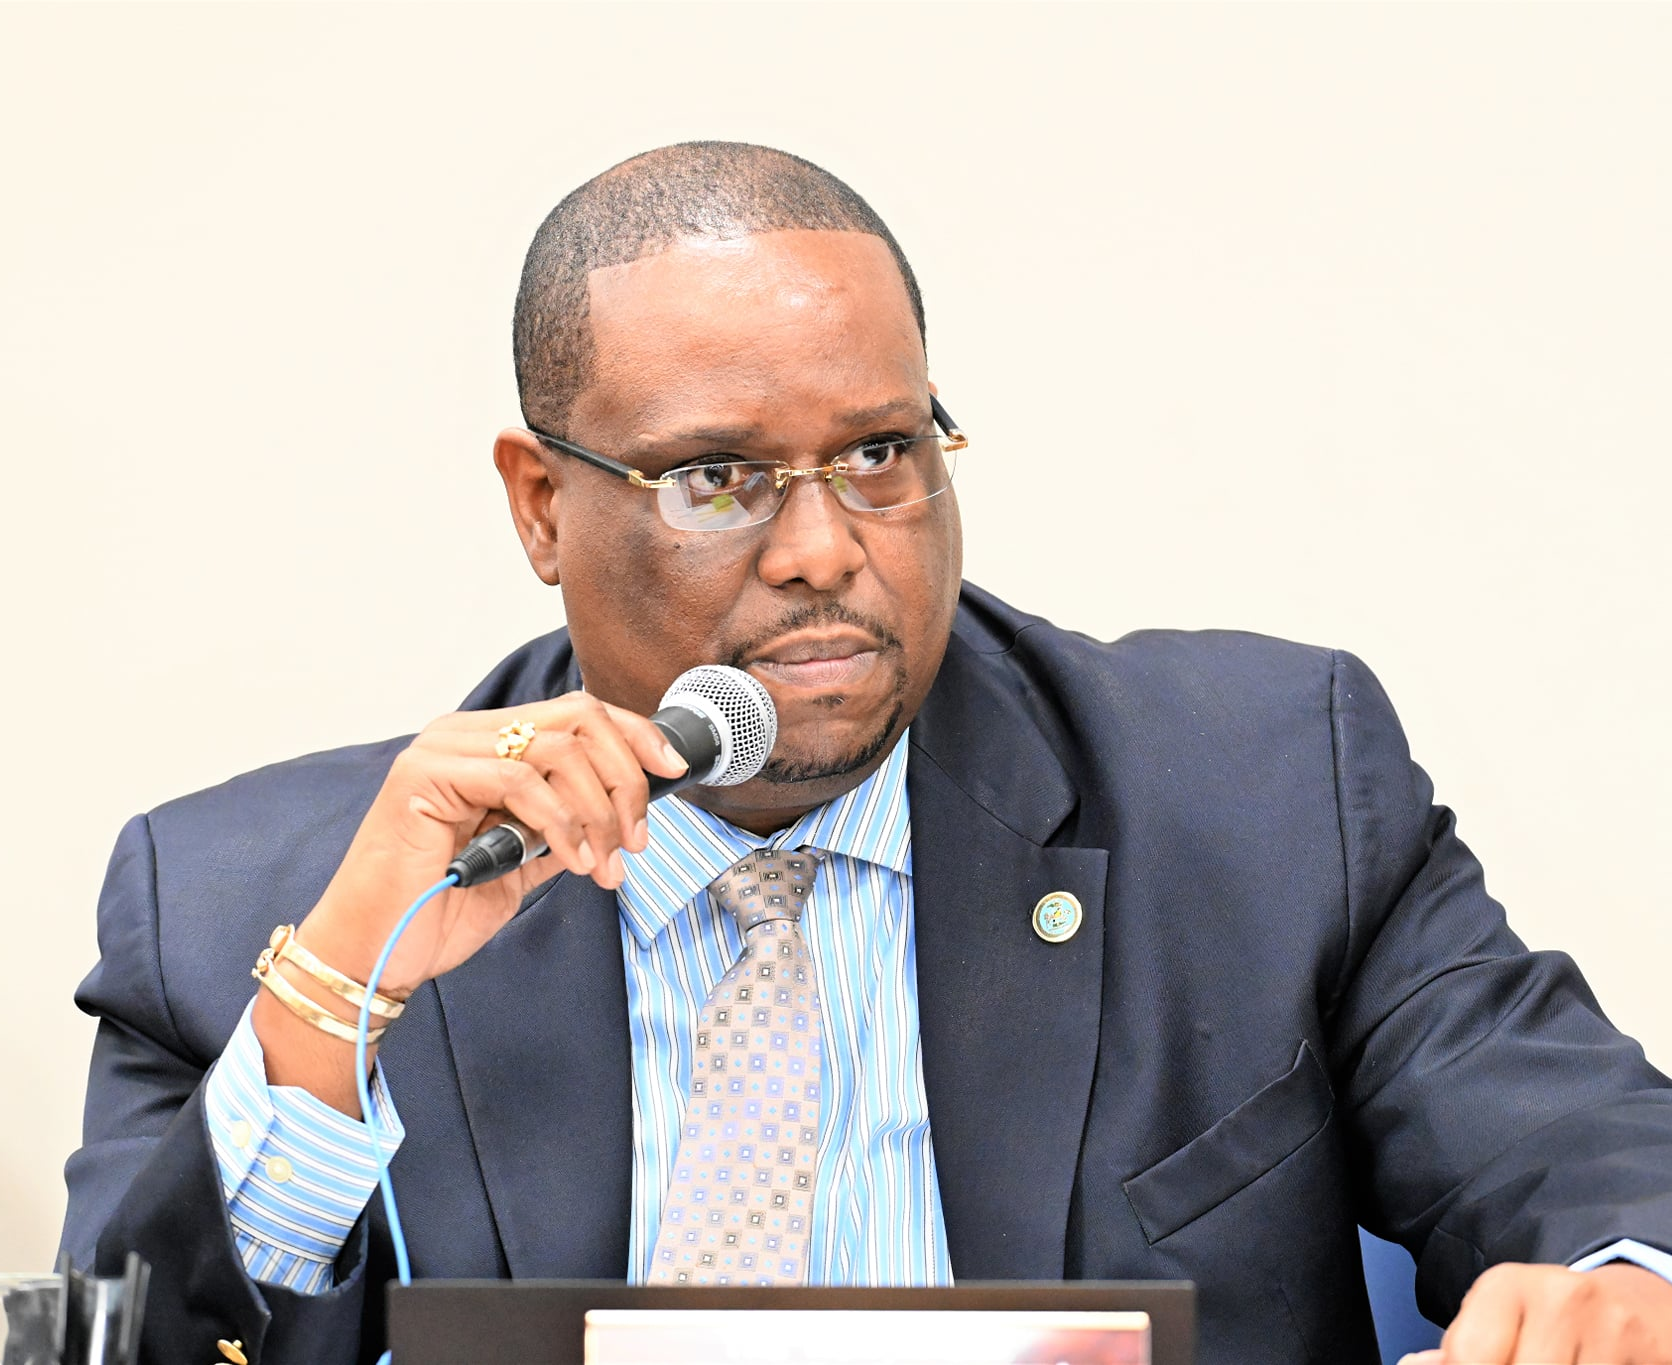 St. Croix Senator Wants Justice Probe Into WAPA's Shady VITOL Contract